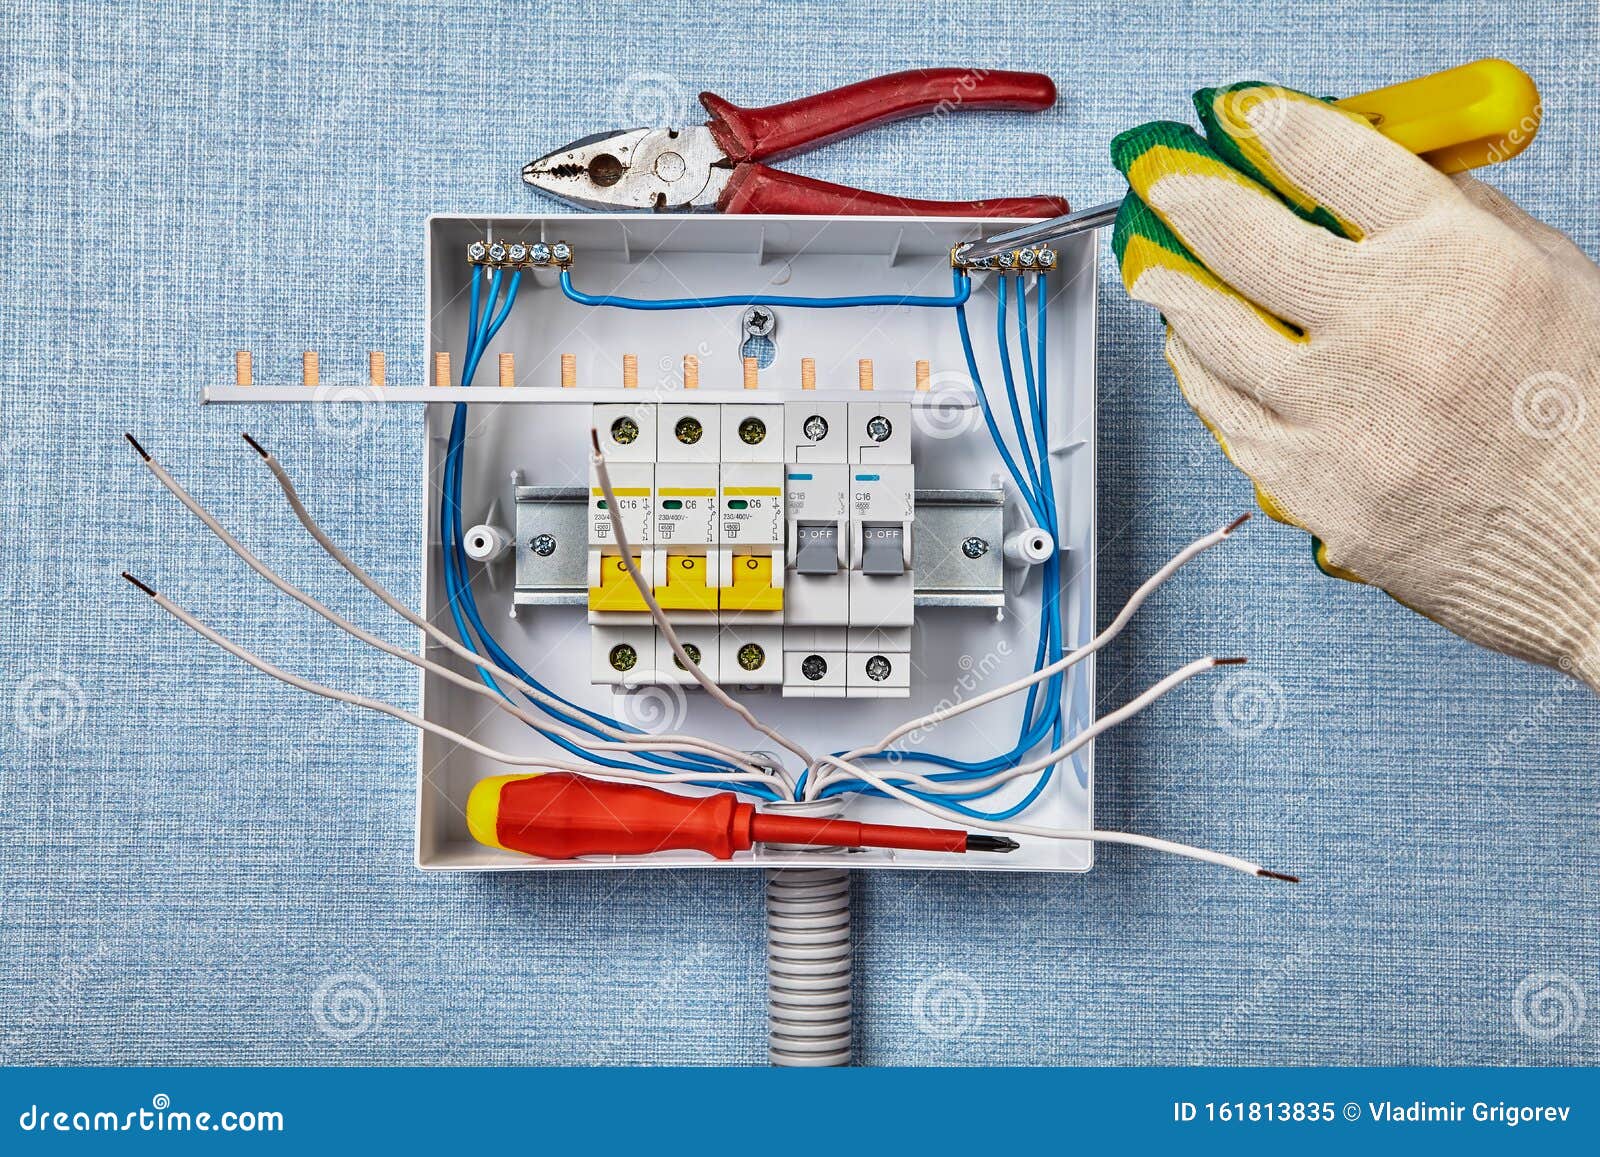 Consumer Unit Fuse Box Wiring Diagram Stock Image - Image of install